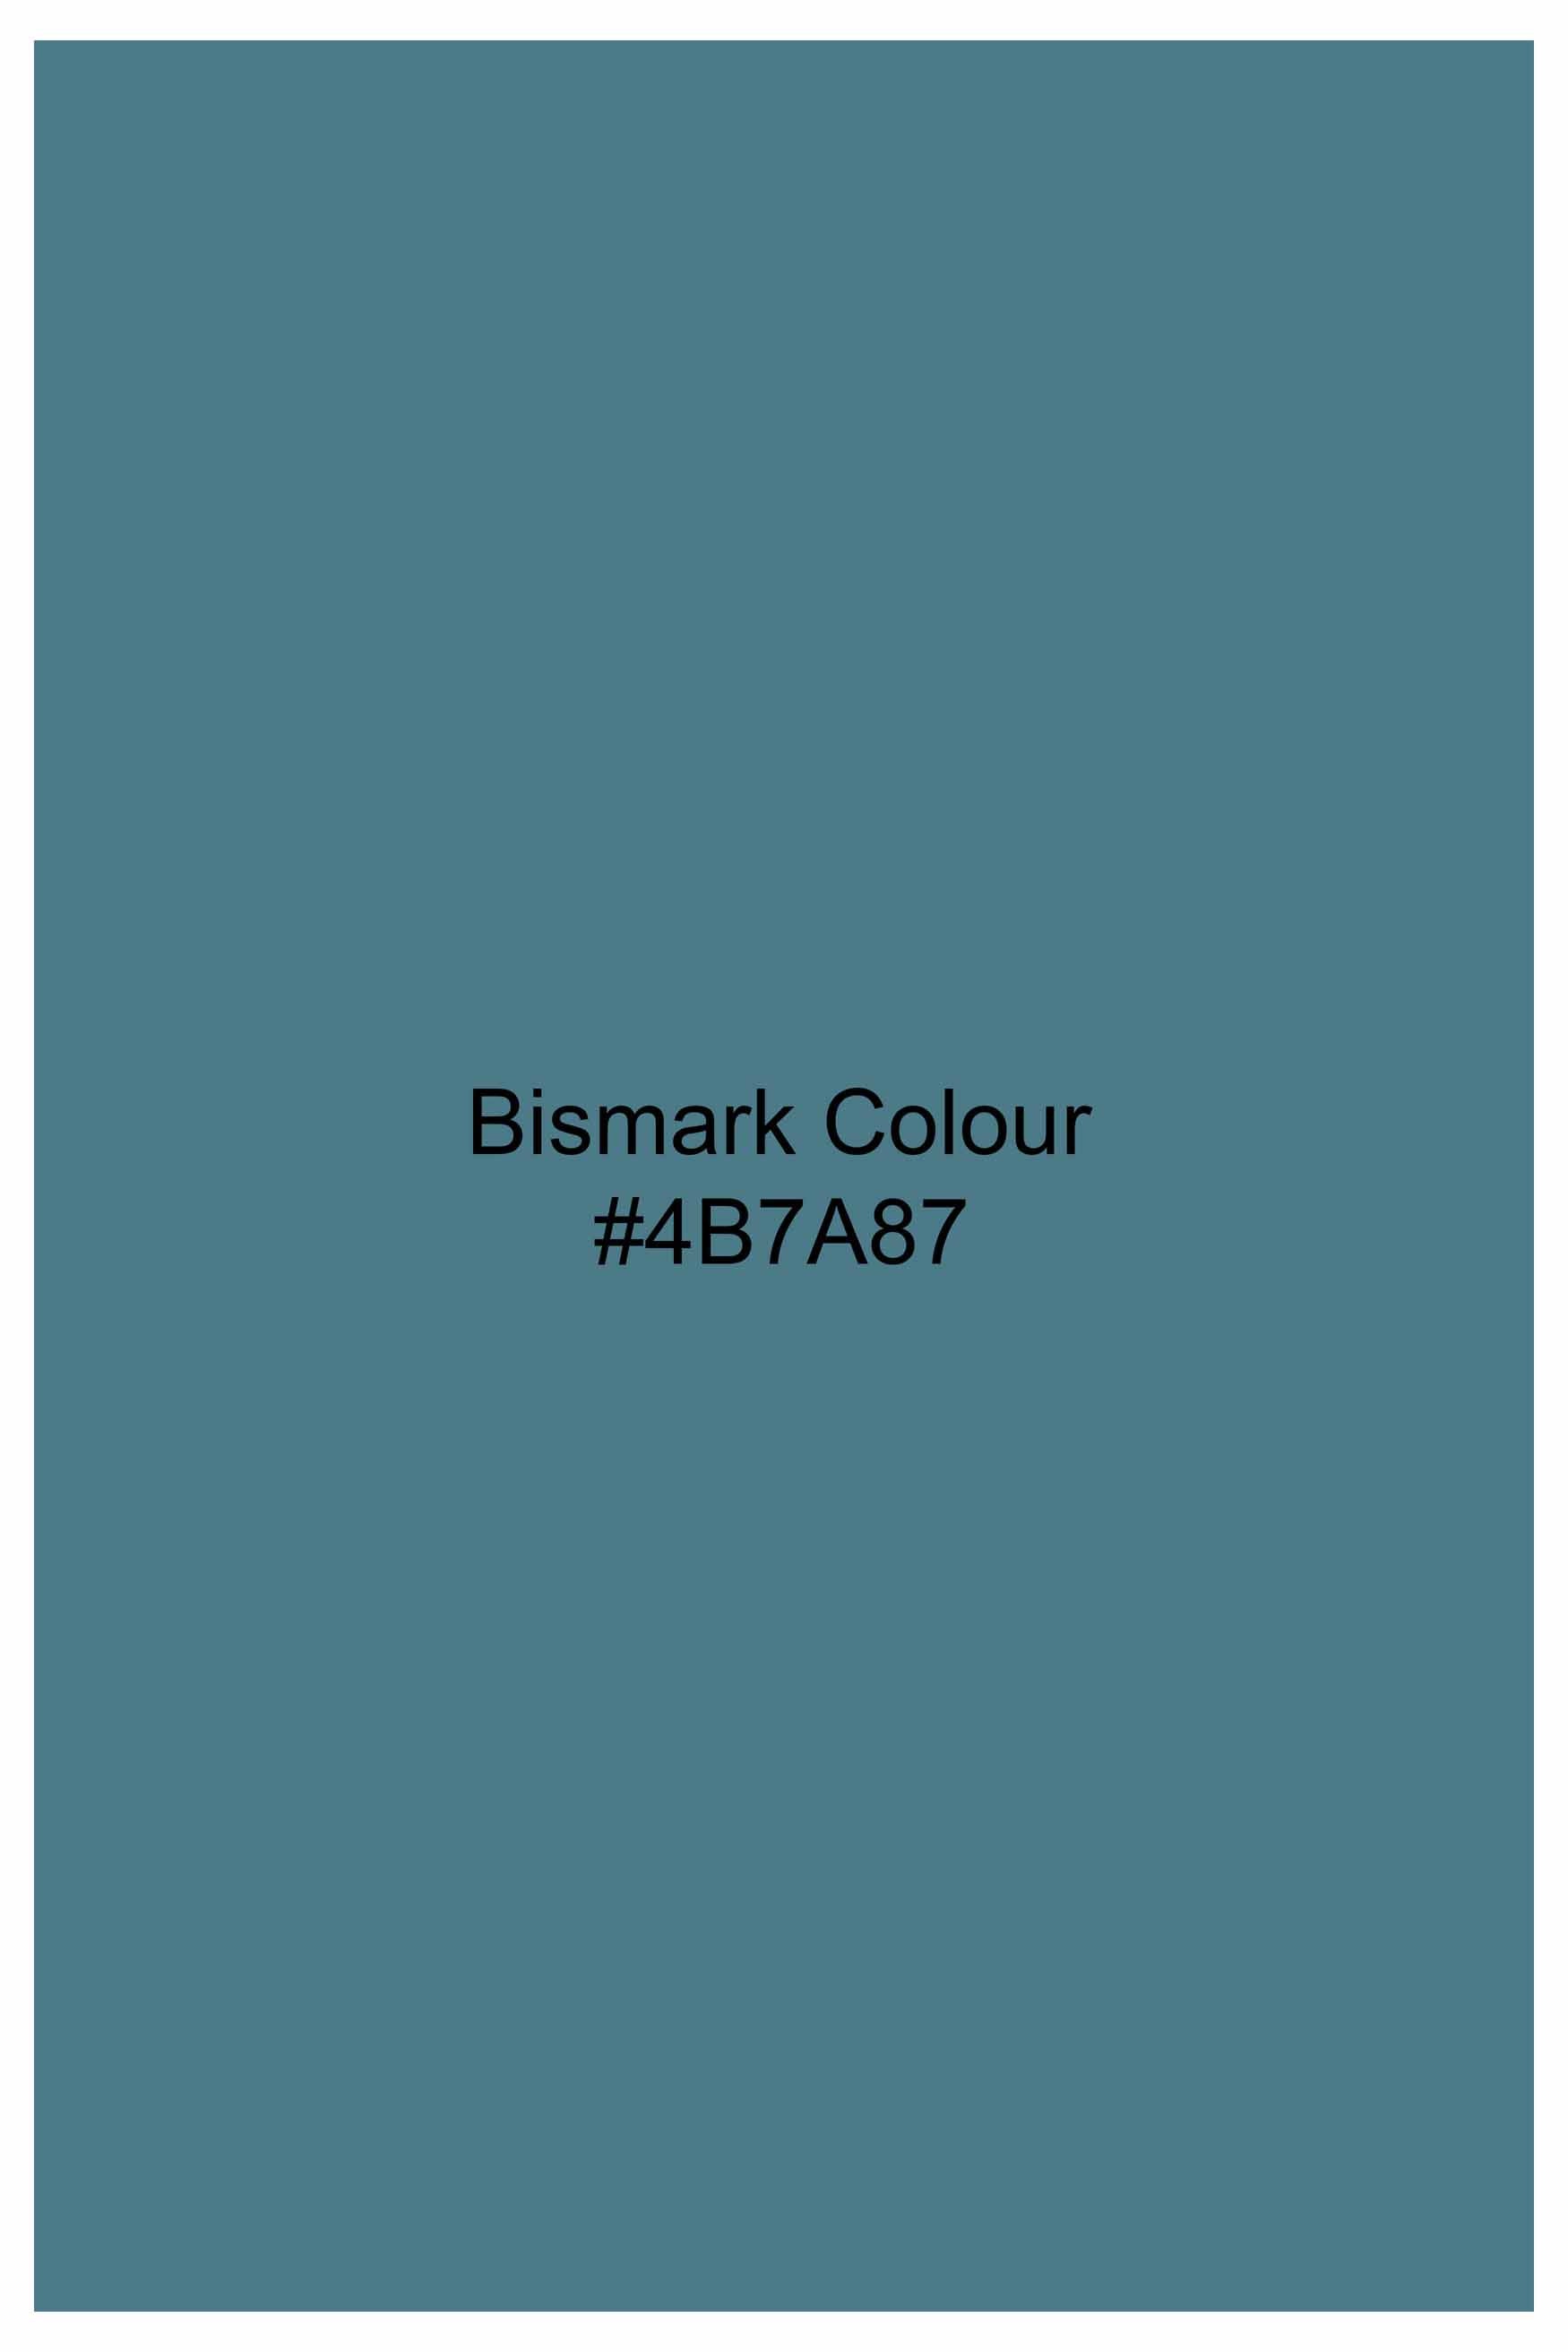 Bismark Blue Leaf Embroidered Luxurious Linen Designer Shirt 6150-BD-E342-38, 6150-BD-E342-H-38, 6150-BD-E342-39, 6150-BD-E342-H-39, 6150-BD-E342-40, 6150-BD-E342-H-40, 6150-BD-E342-42, 6150-BD-E342-H-42, 6150-BD-E342-44, 6150-BD-E342-H-44, 6150-BD-E342-46, 6150-BD-E342-H-46, 6150-BD-E342-48, 6150-BD-E342-H-48, 6150-BD-E342-50, 6150-BD-E342-H-50, 6150-BD-E342-52, 6150-BD-E342-H-52